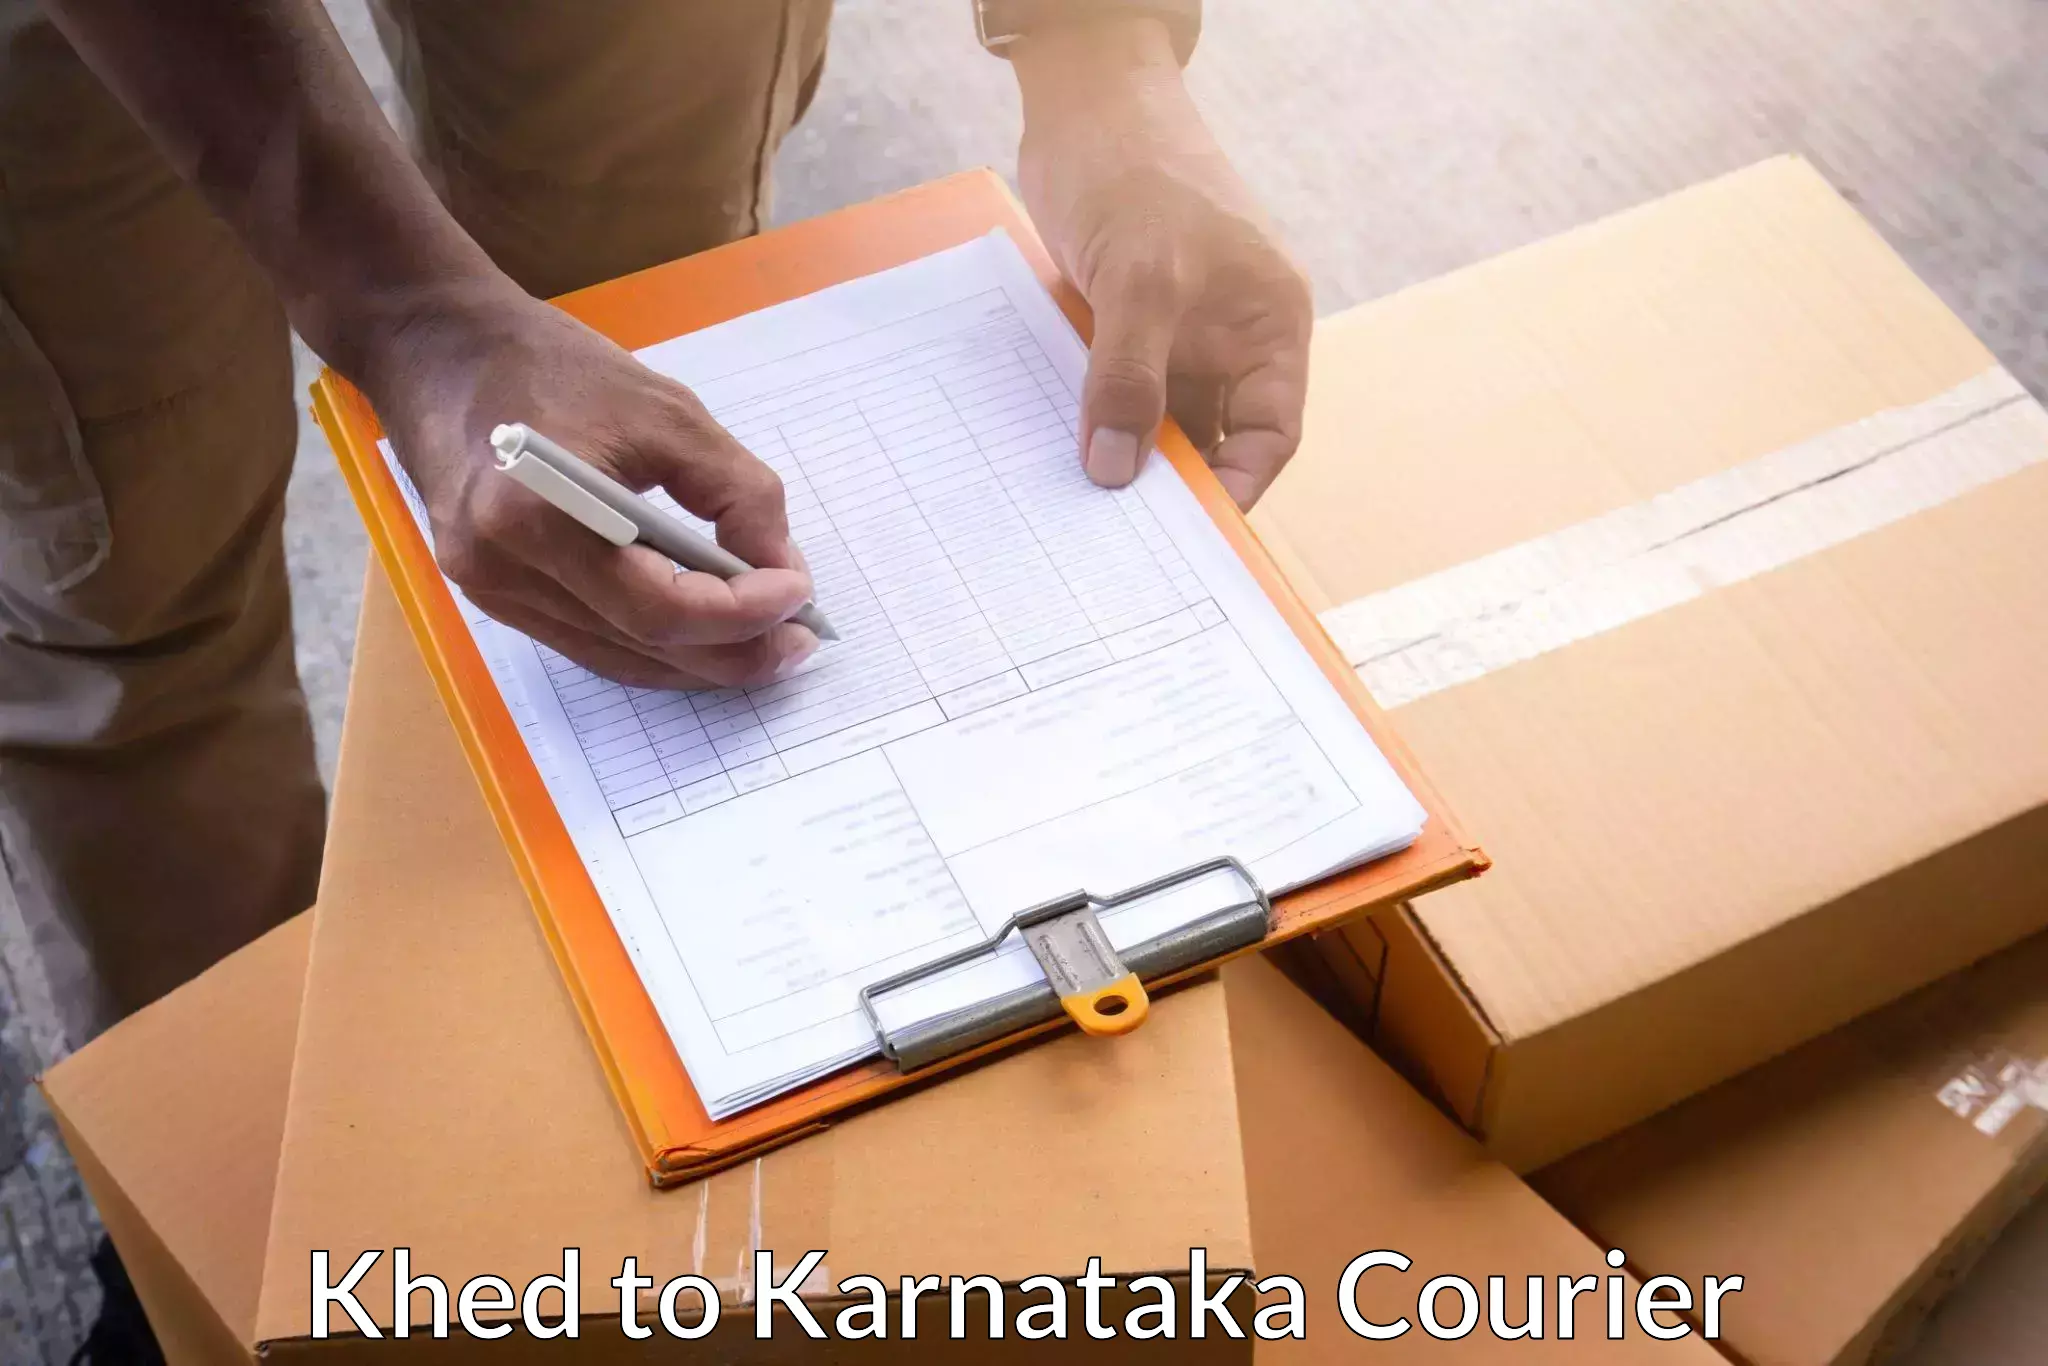 Subscription-based courier Khed to Karnataka